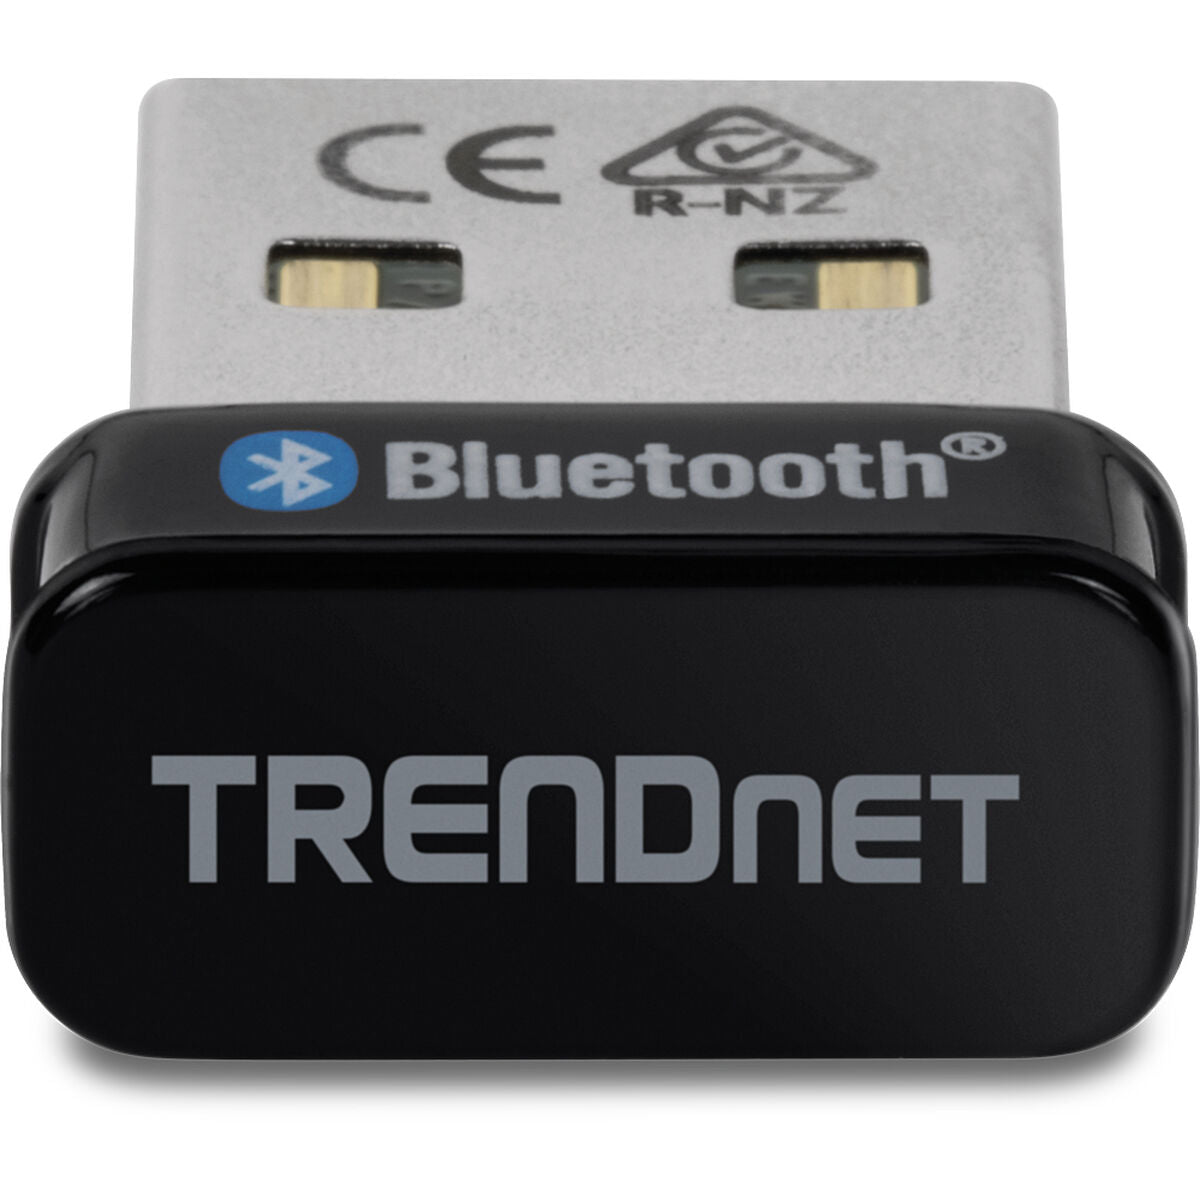 Network Adaptor Trendnet TBW-110UB